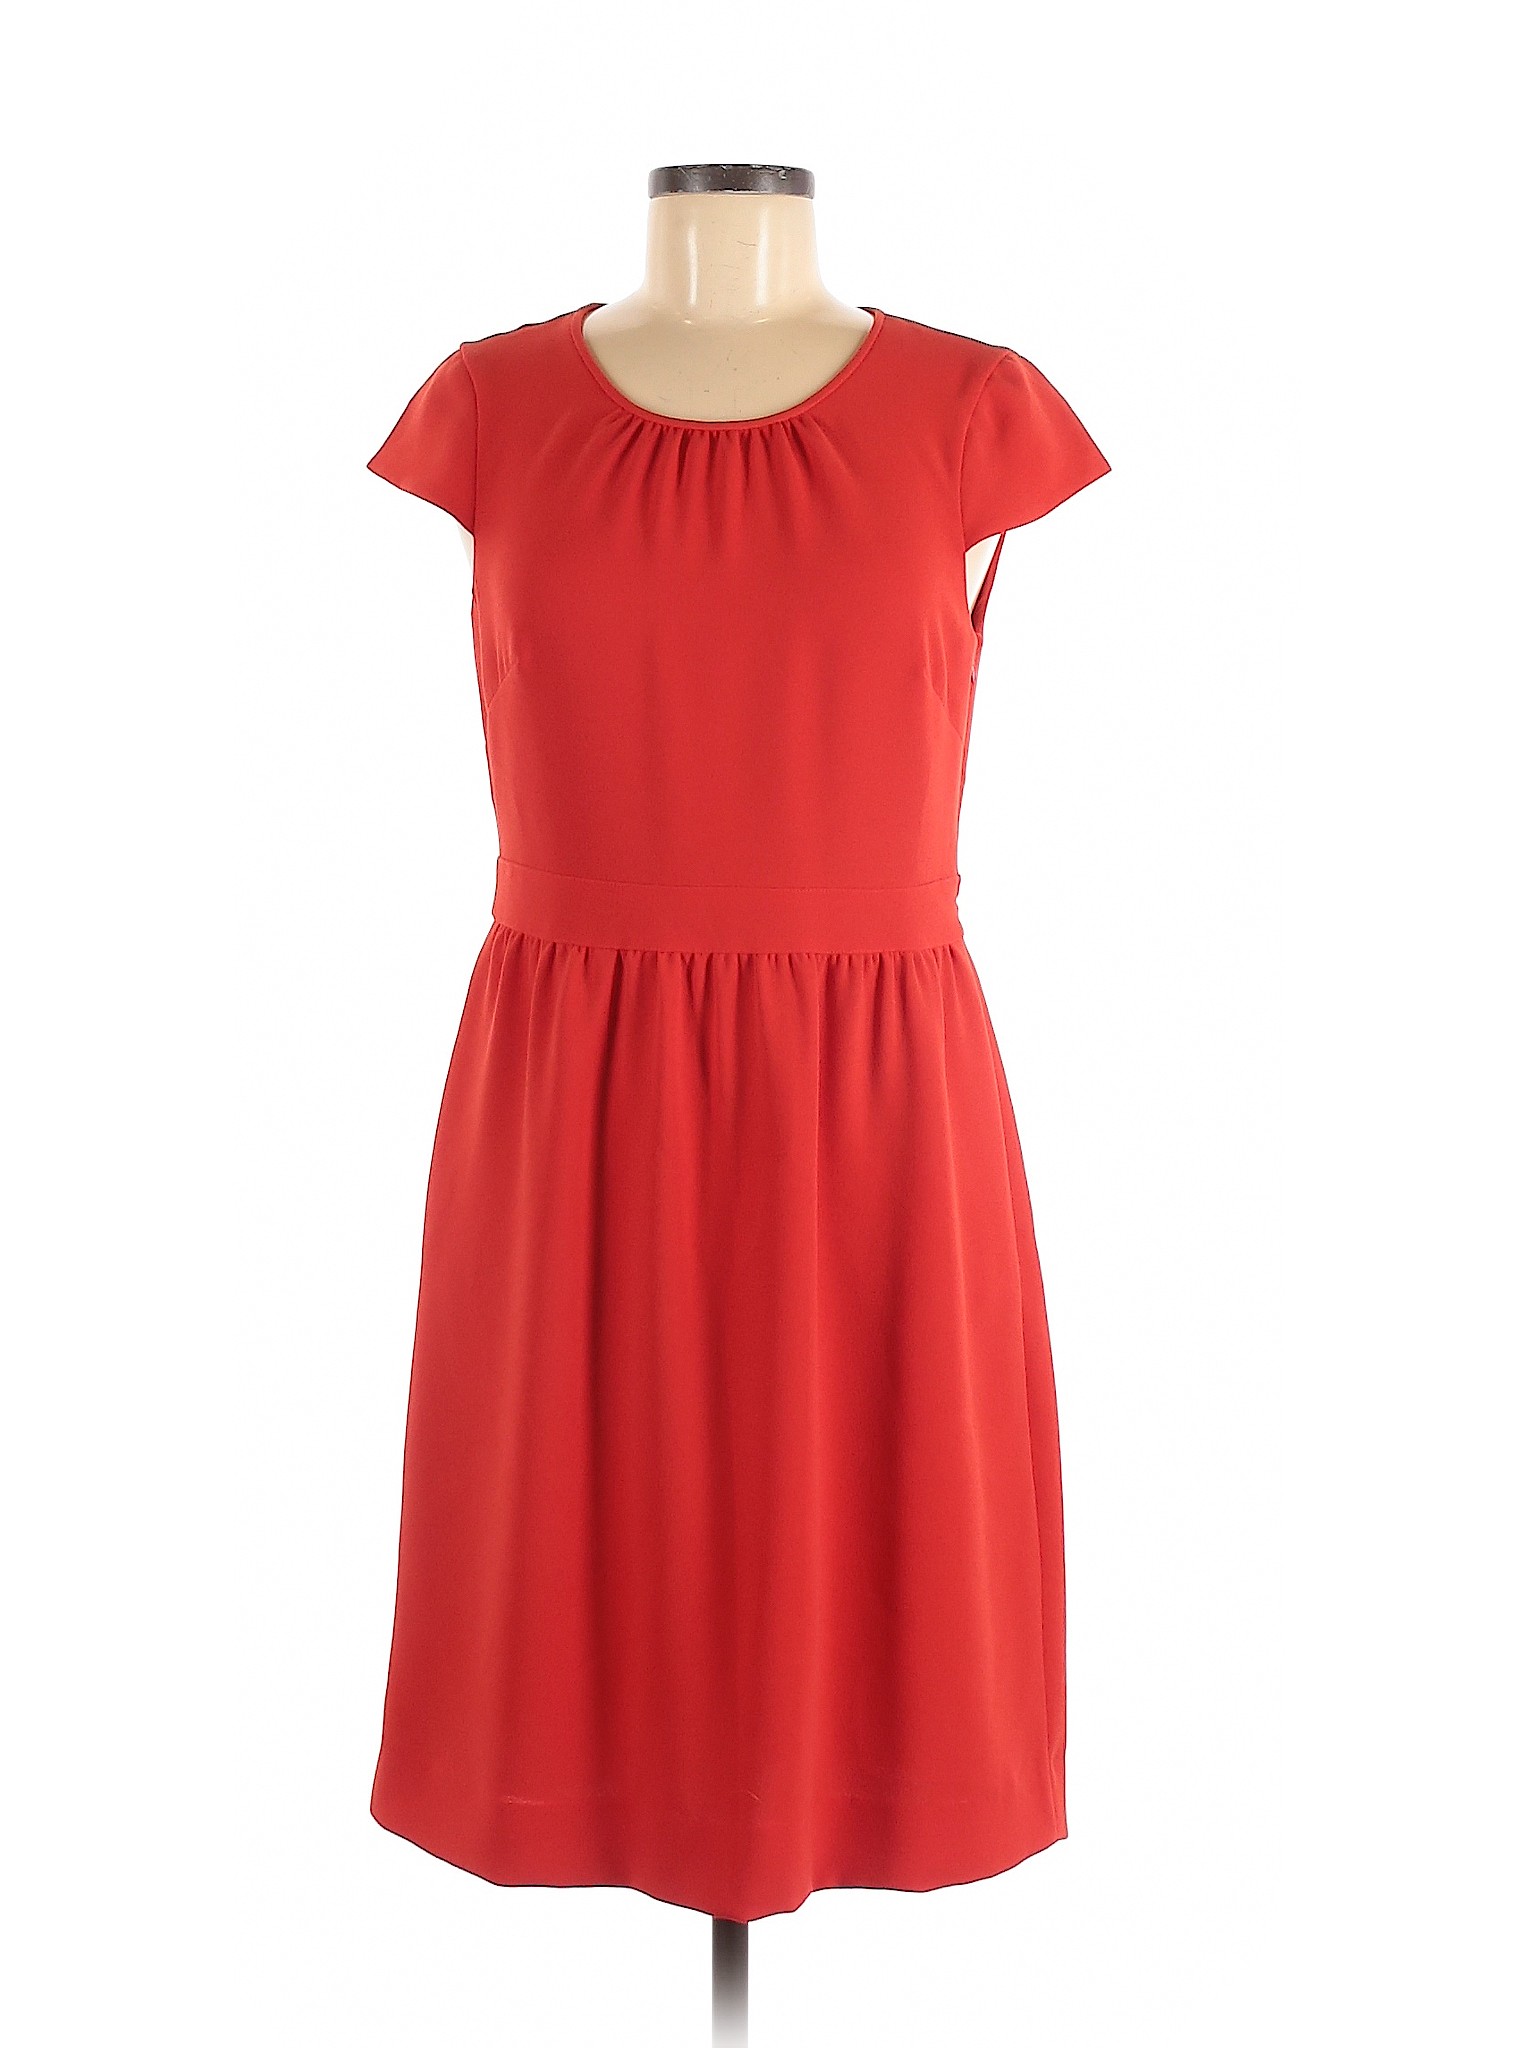 J.Crew Women Red Casual Dress 6 | eBay